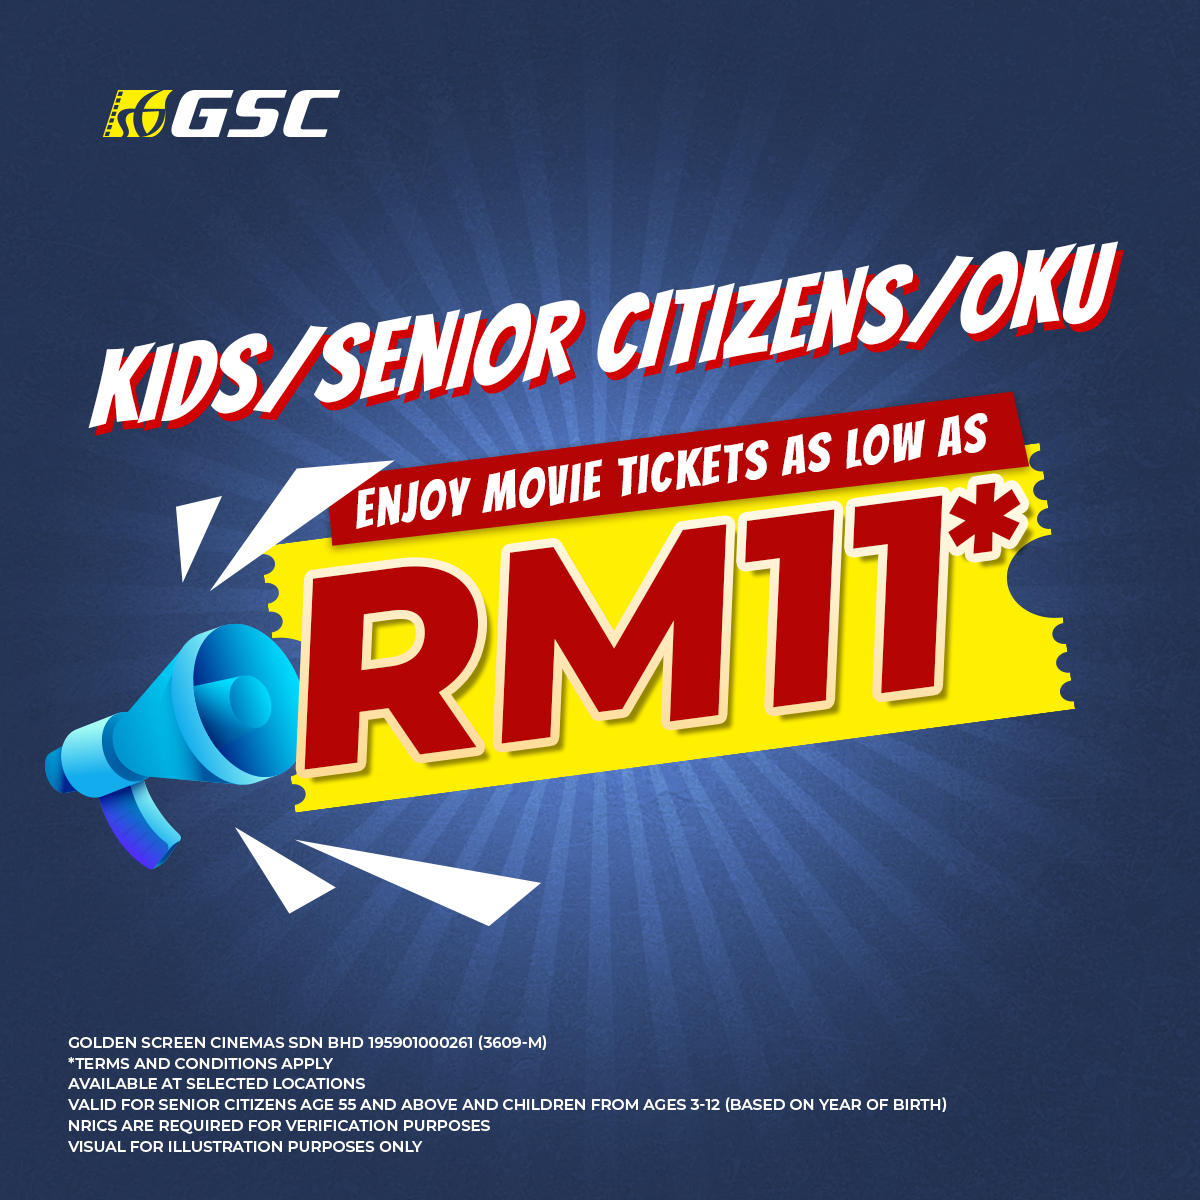 Special Ticket Prices for Kids / Seniors Citizens / OKU 